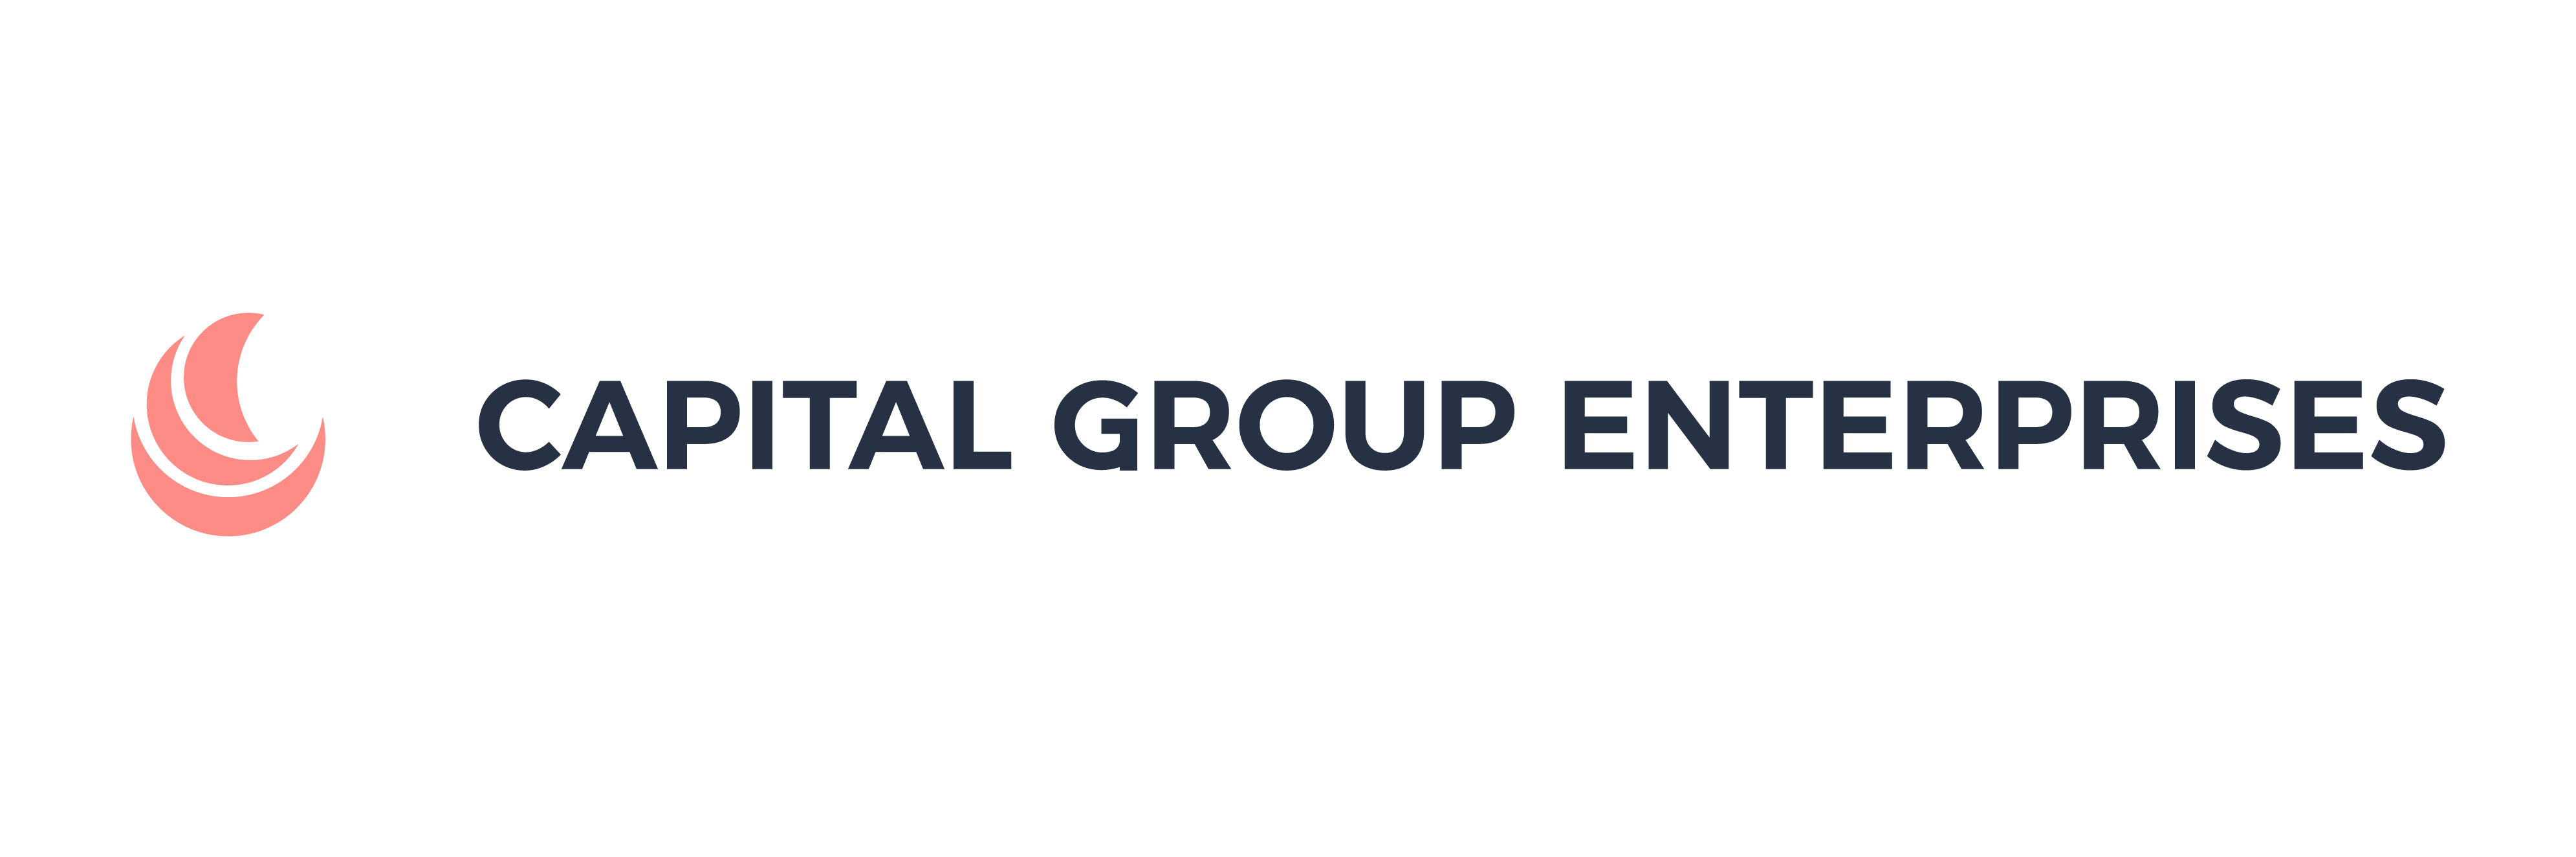 Capital Group Enterprises Logo